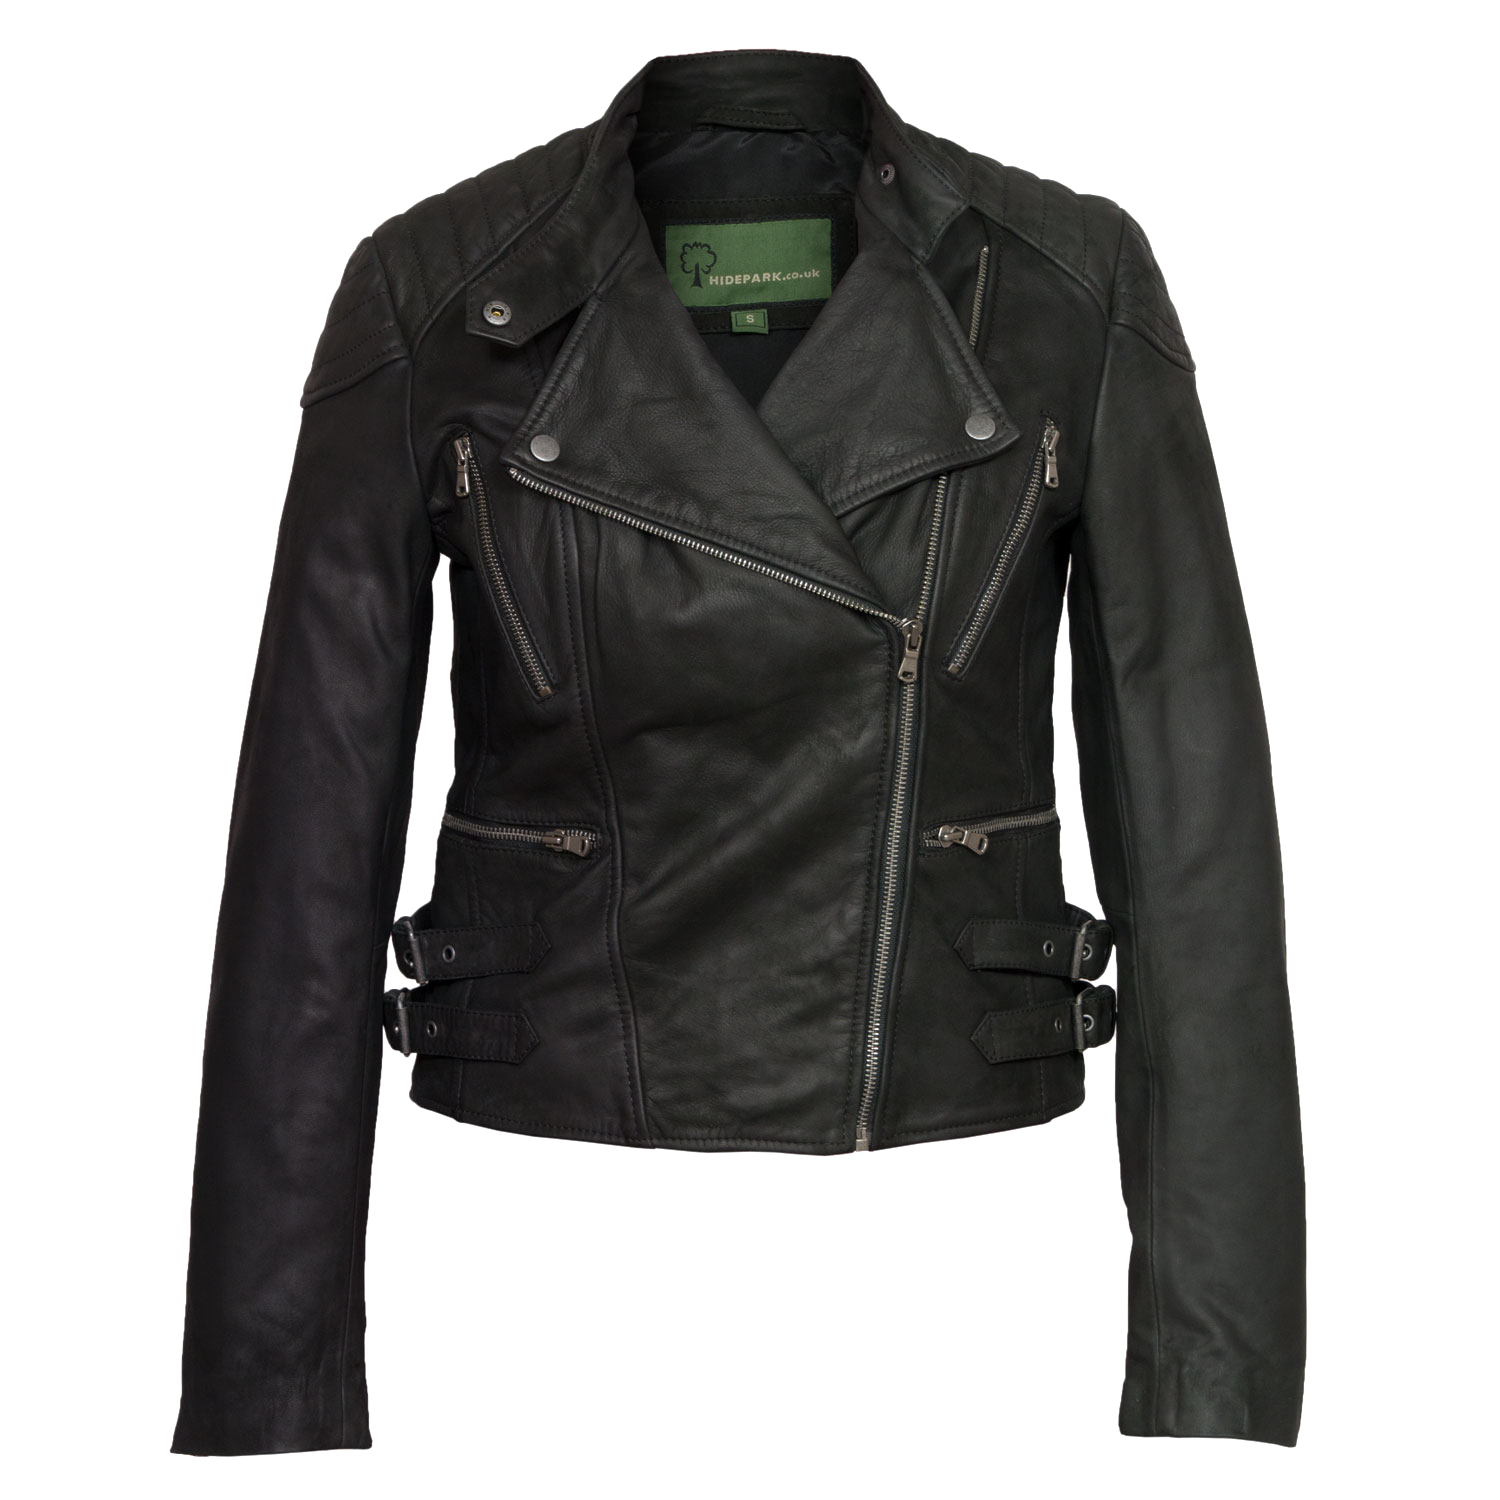 Black Leather Jacket PNG Free Download